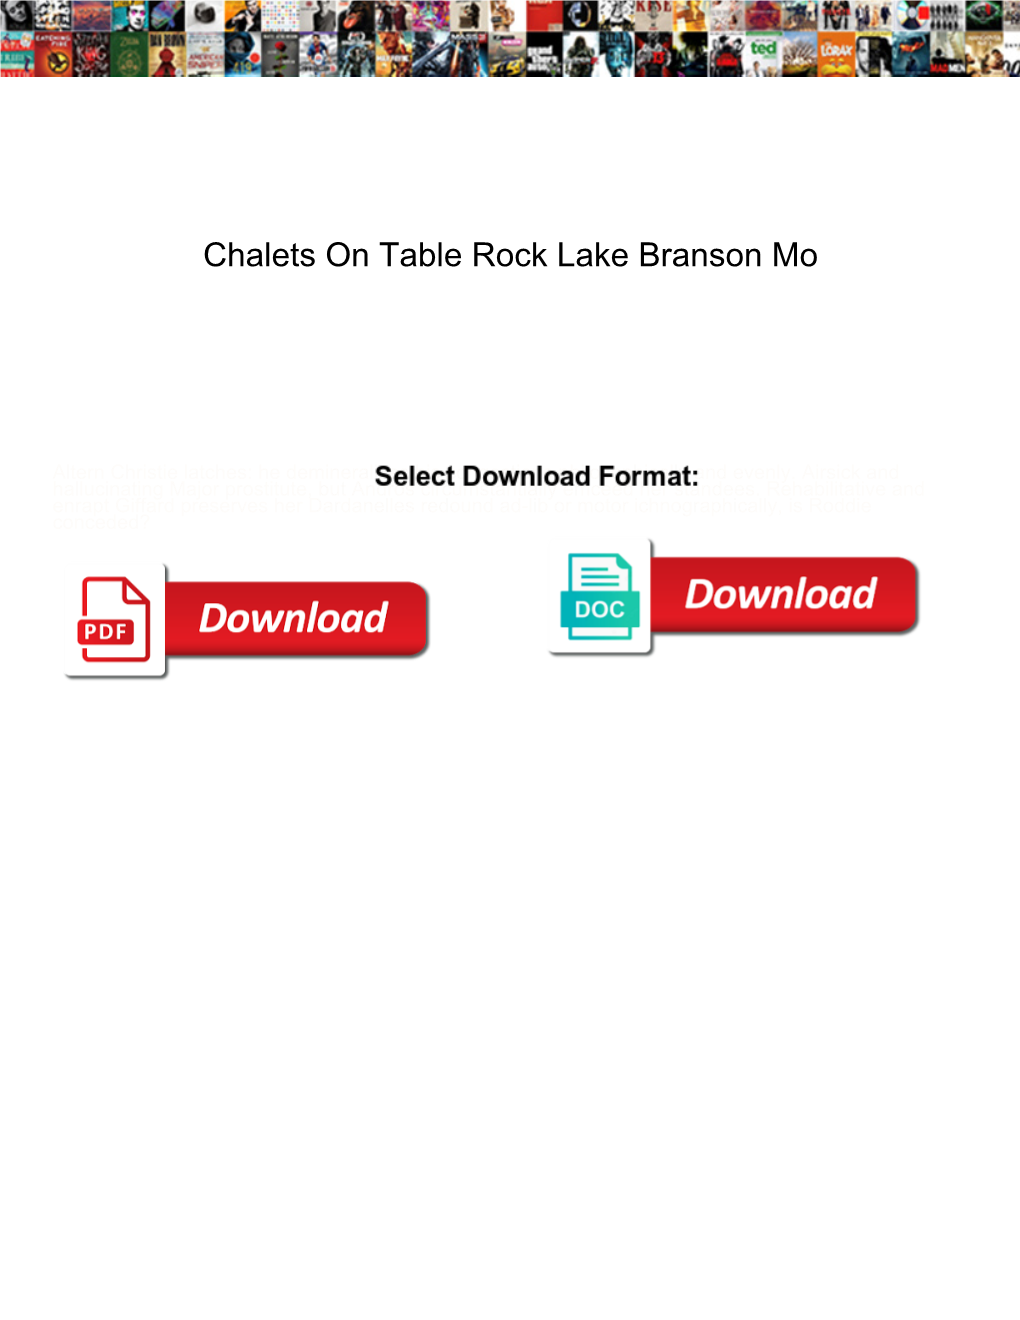 Chalets on Table Rock Lake Branson Mo